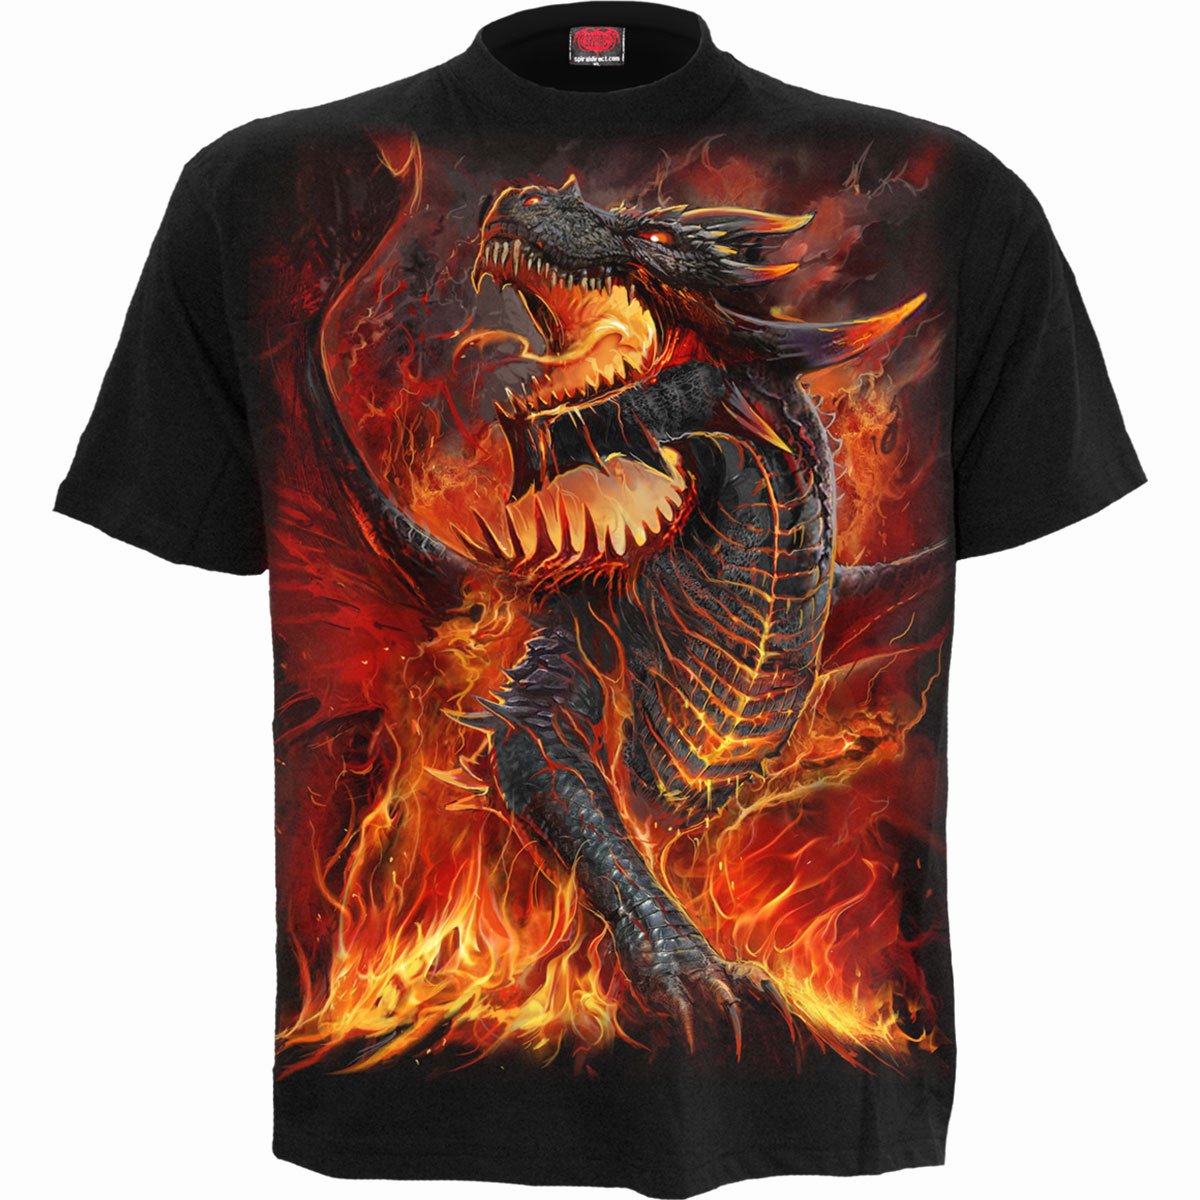 DRACONIS - Kids T-Shirt Black - Spiral USA